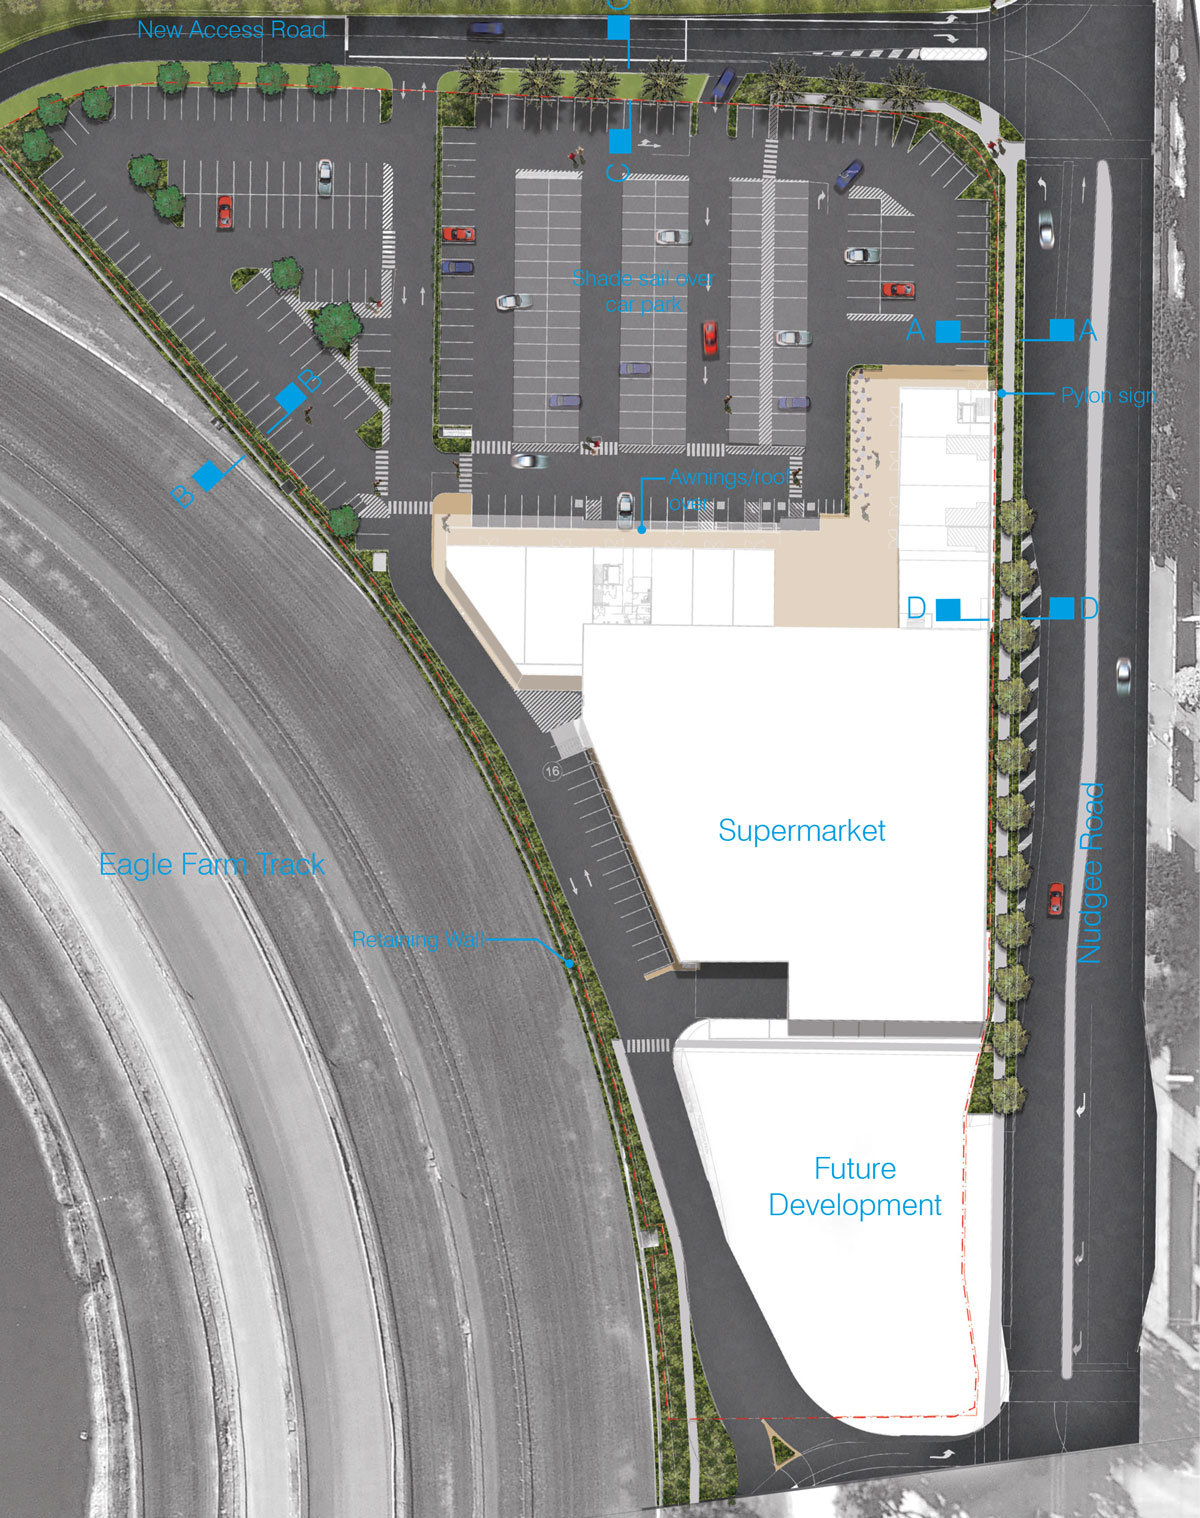 Landscape plan of shopping precinct from DA A004449974